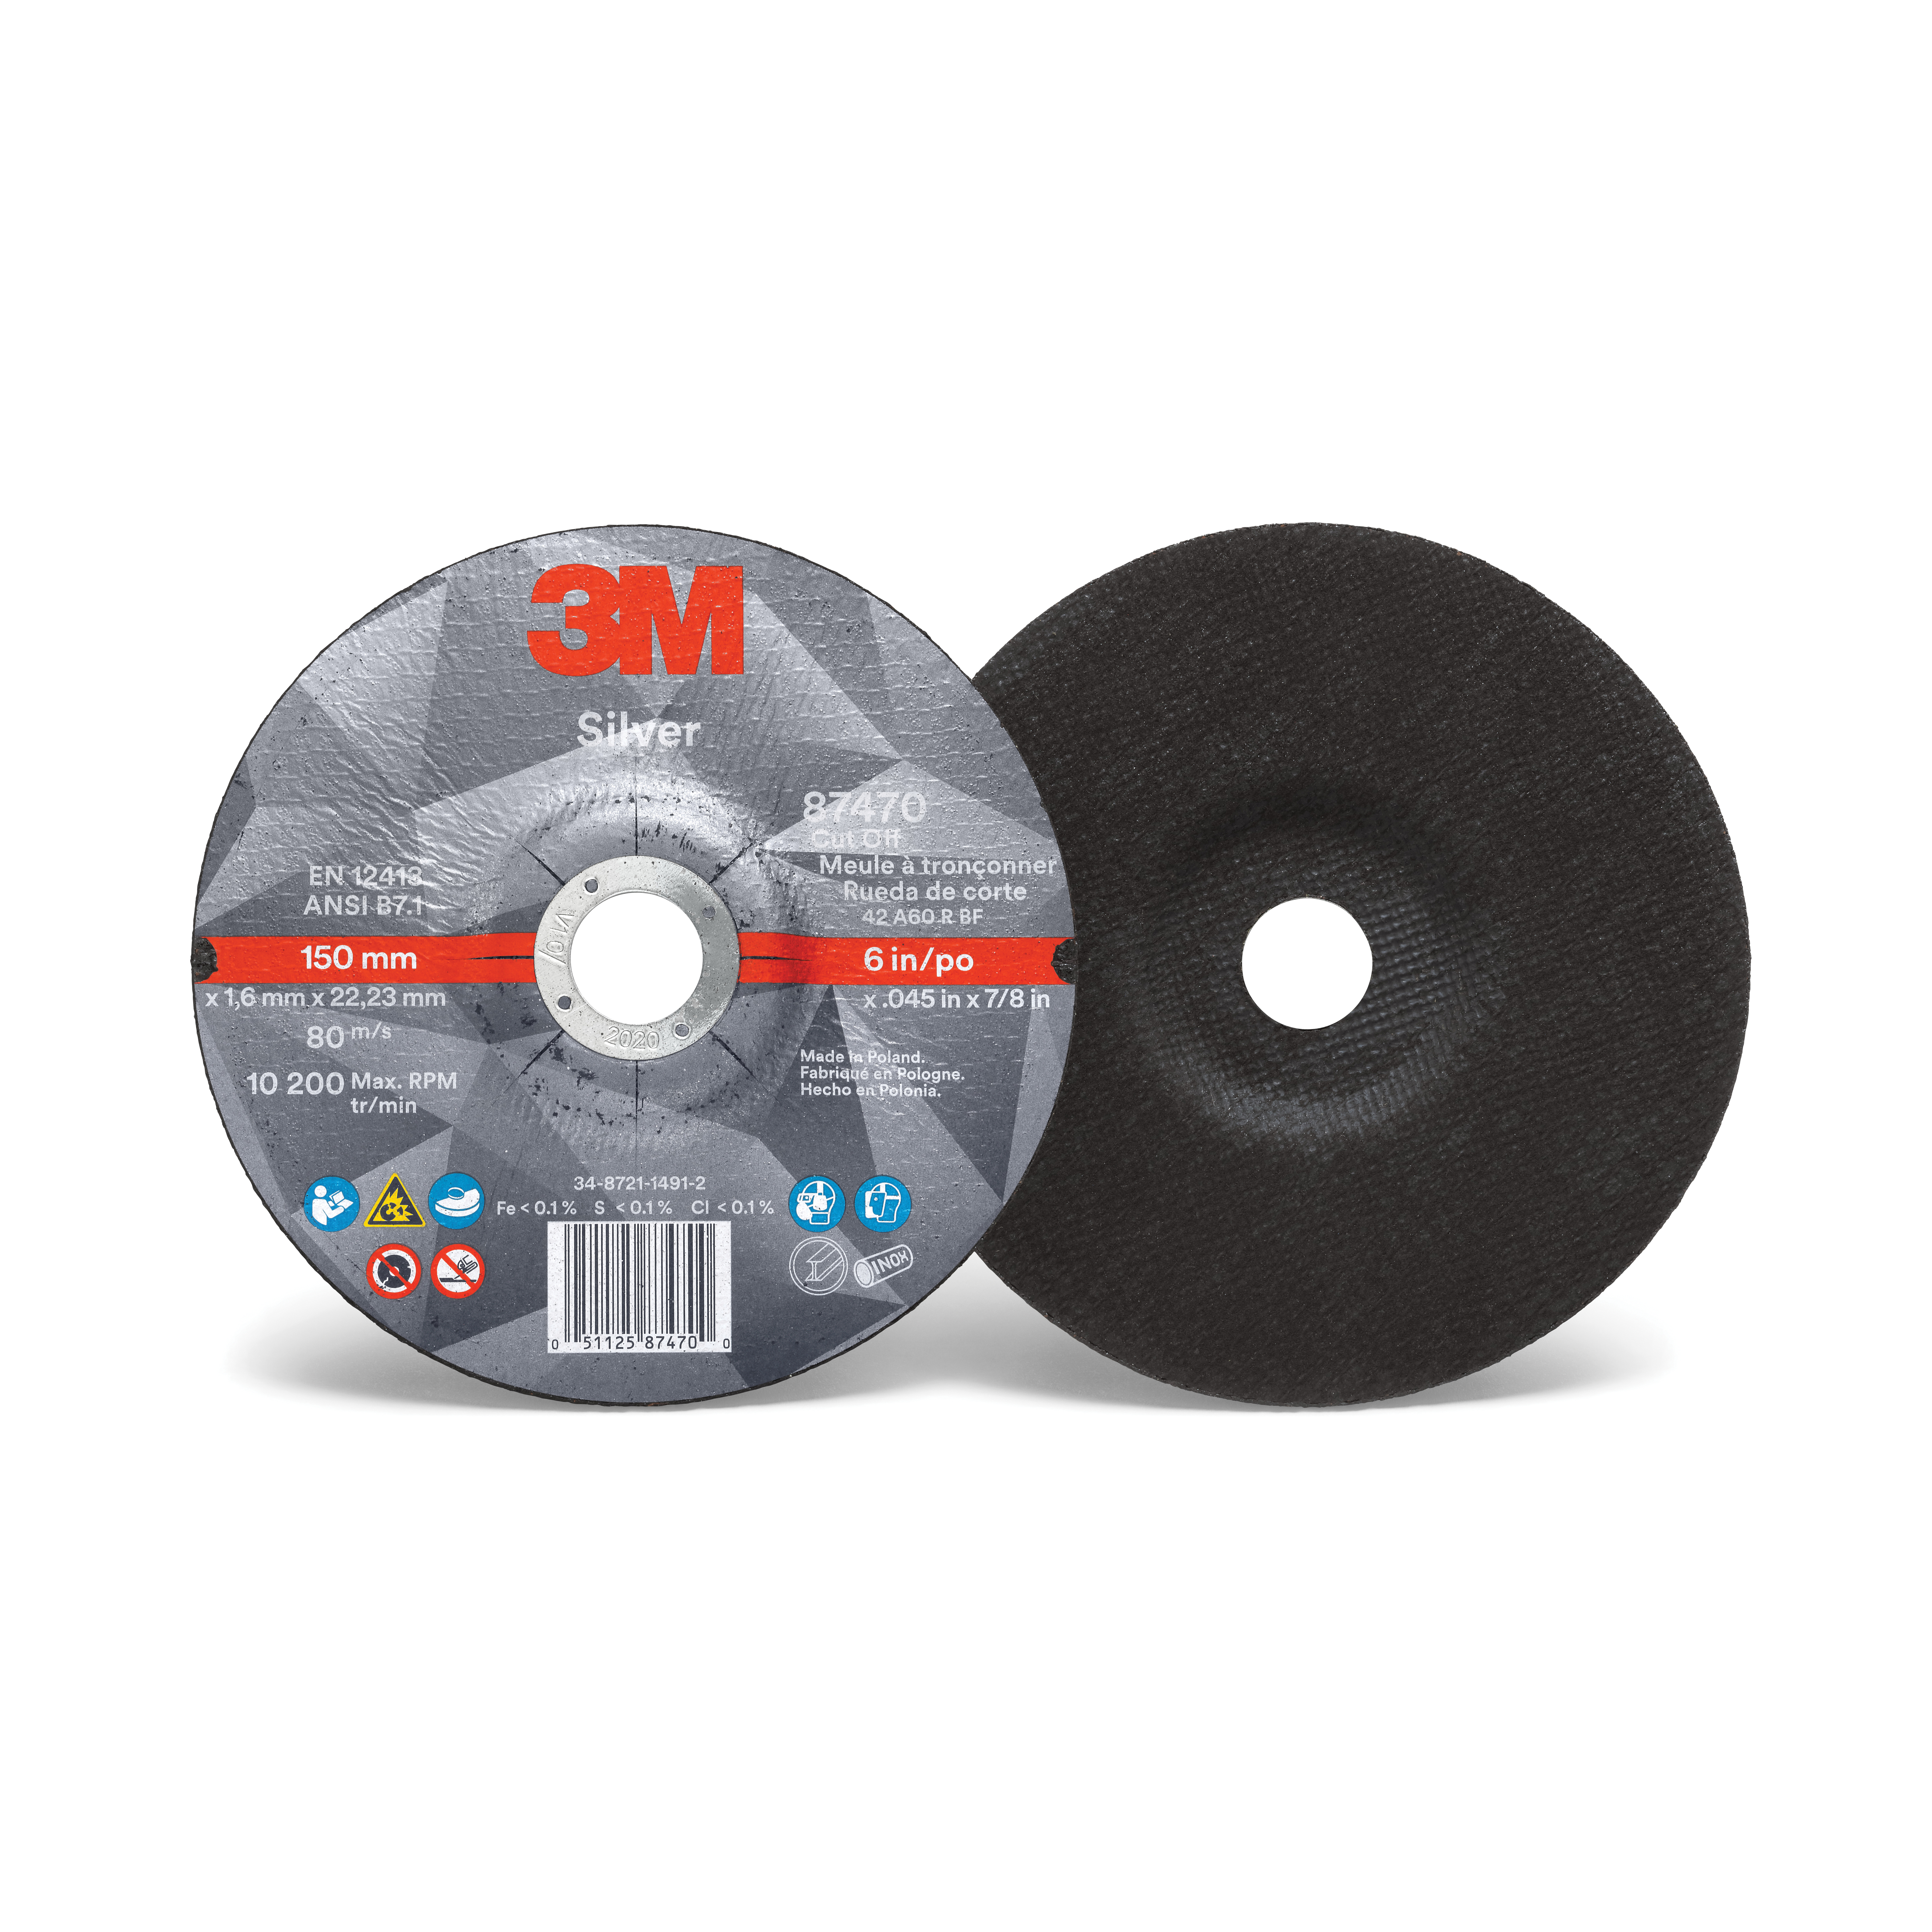 3M™ Silver 051125-87470 Type 27 Cut-Off Wheel, 6 in Dia x 0.045 in THK, 7/8 in Center Hole, Ceramic Grain Abrasive